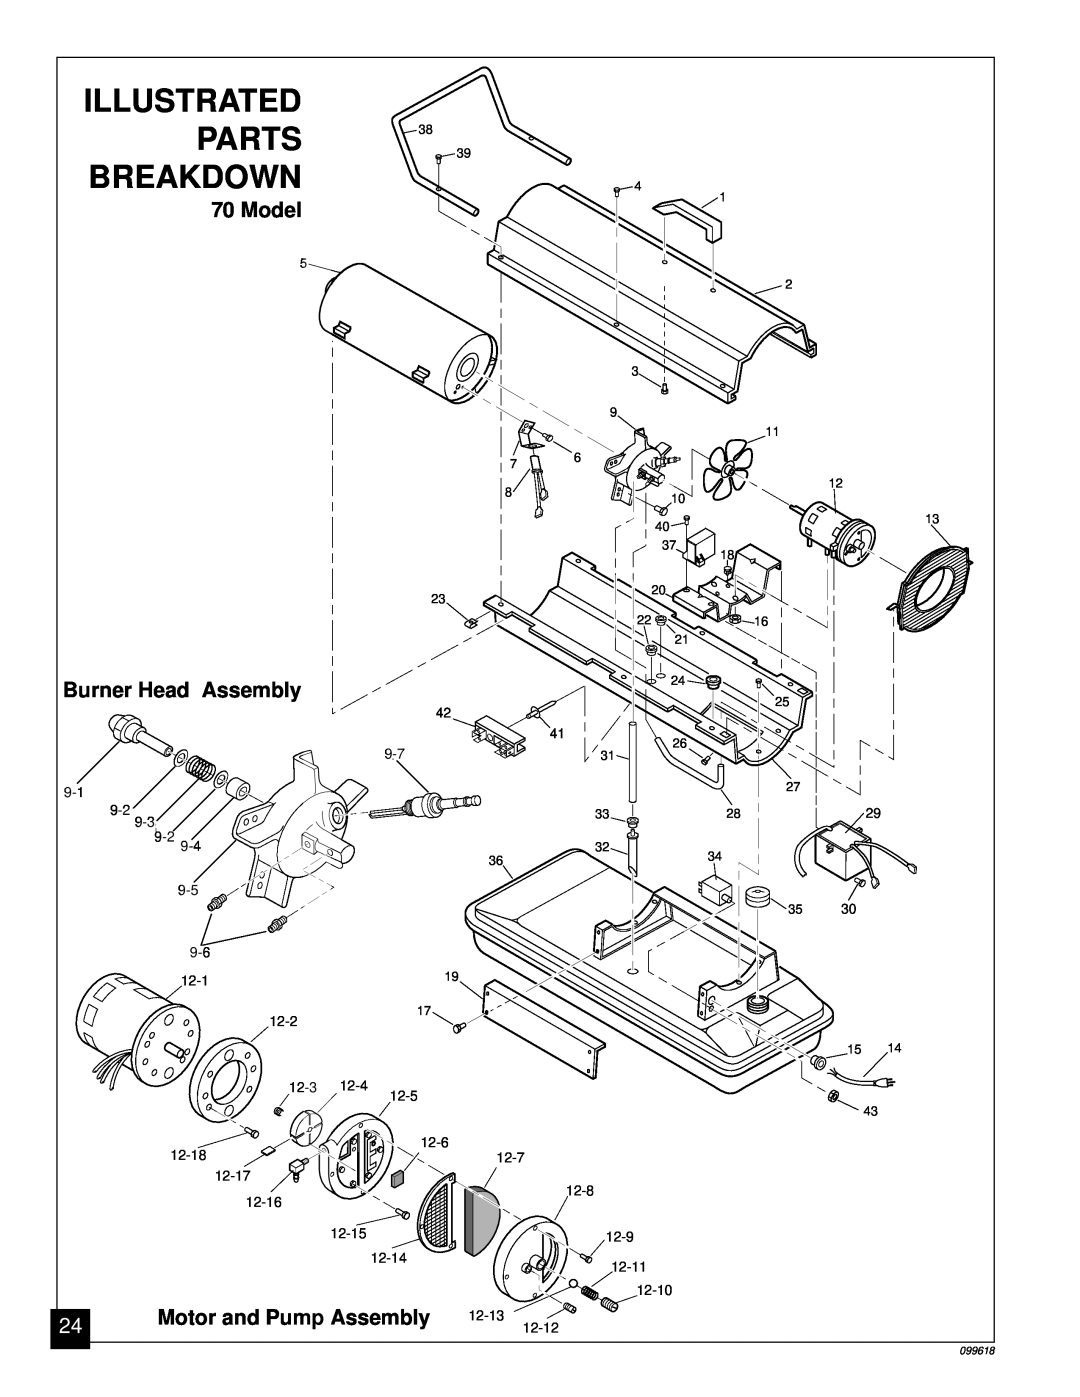 Desa 50 owner manual Illustrated, Parts, Breakdown, Model, Burner Head Assembly, Motor and Pump Assembly 